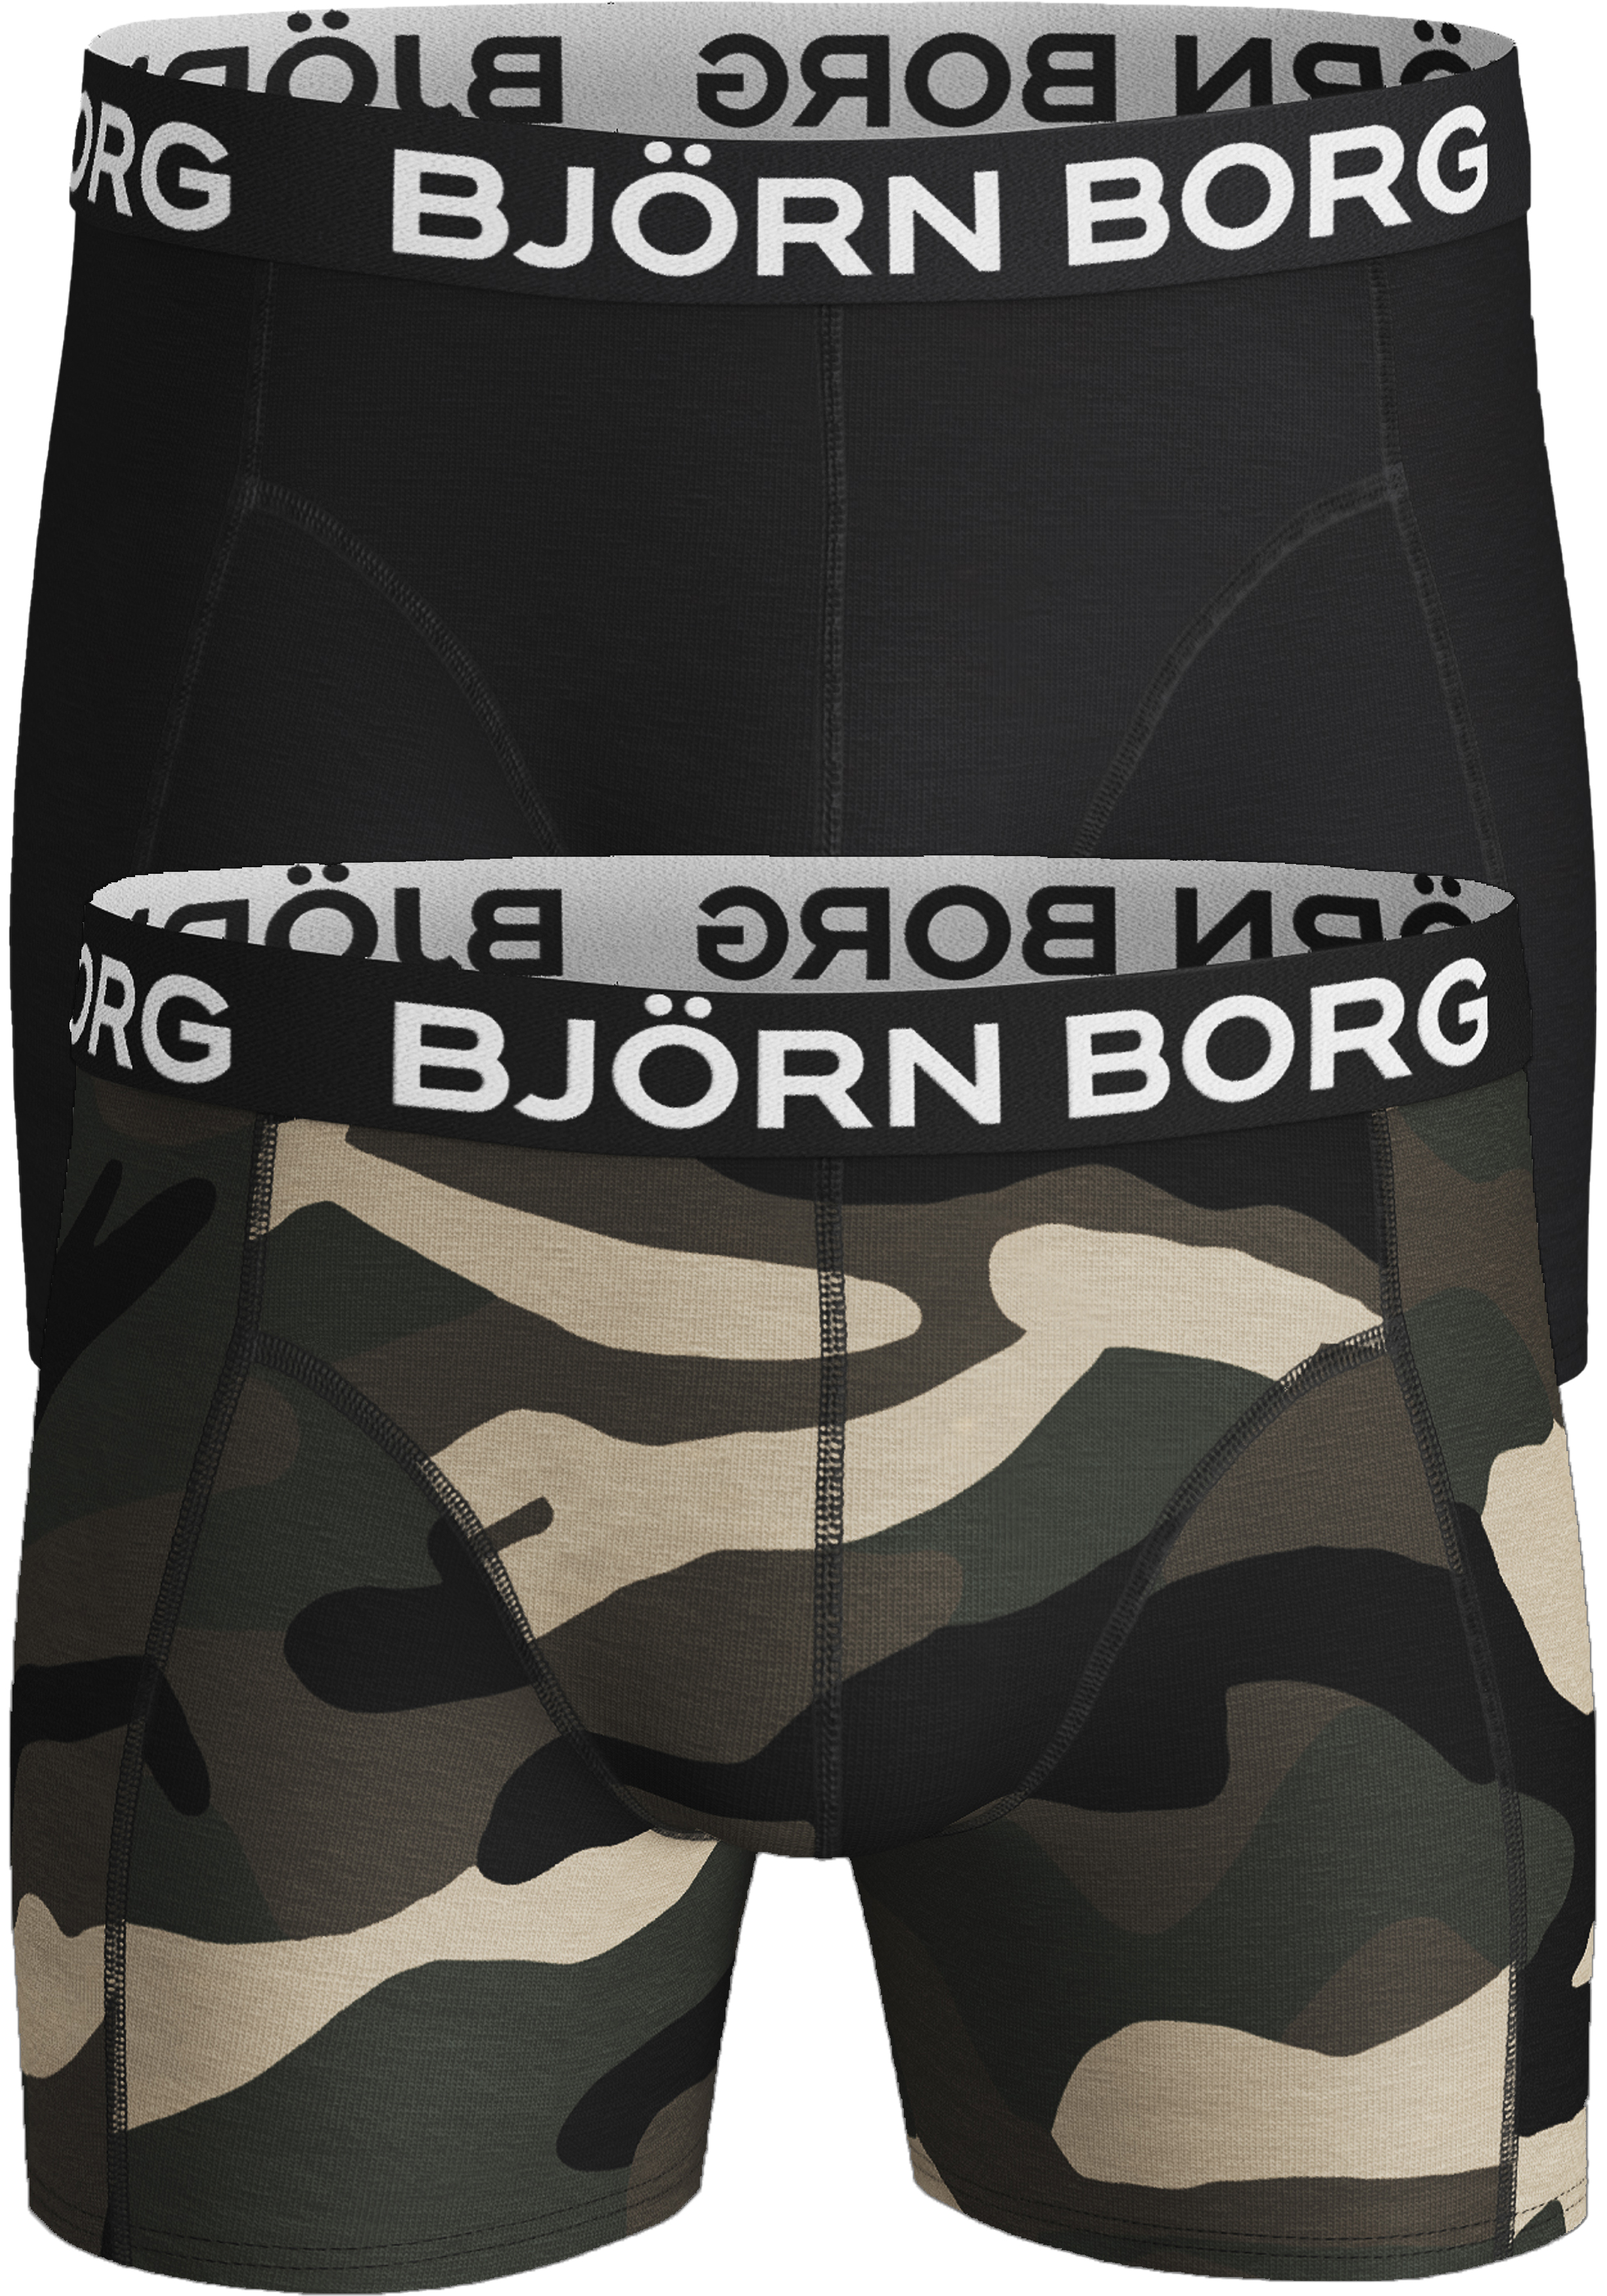 Ronde Voorzitter annuleren Bjorn Borg boxershorts Core (2-pack), heren boxers normale lengte,... -  Zomer SALE tot 50% korting